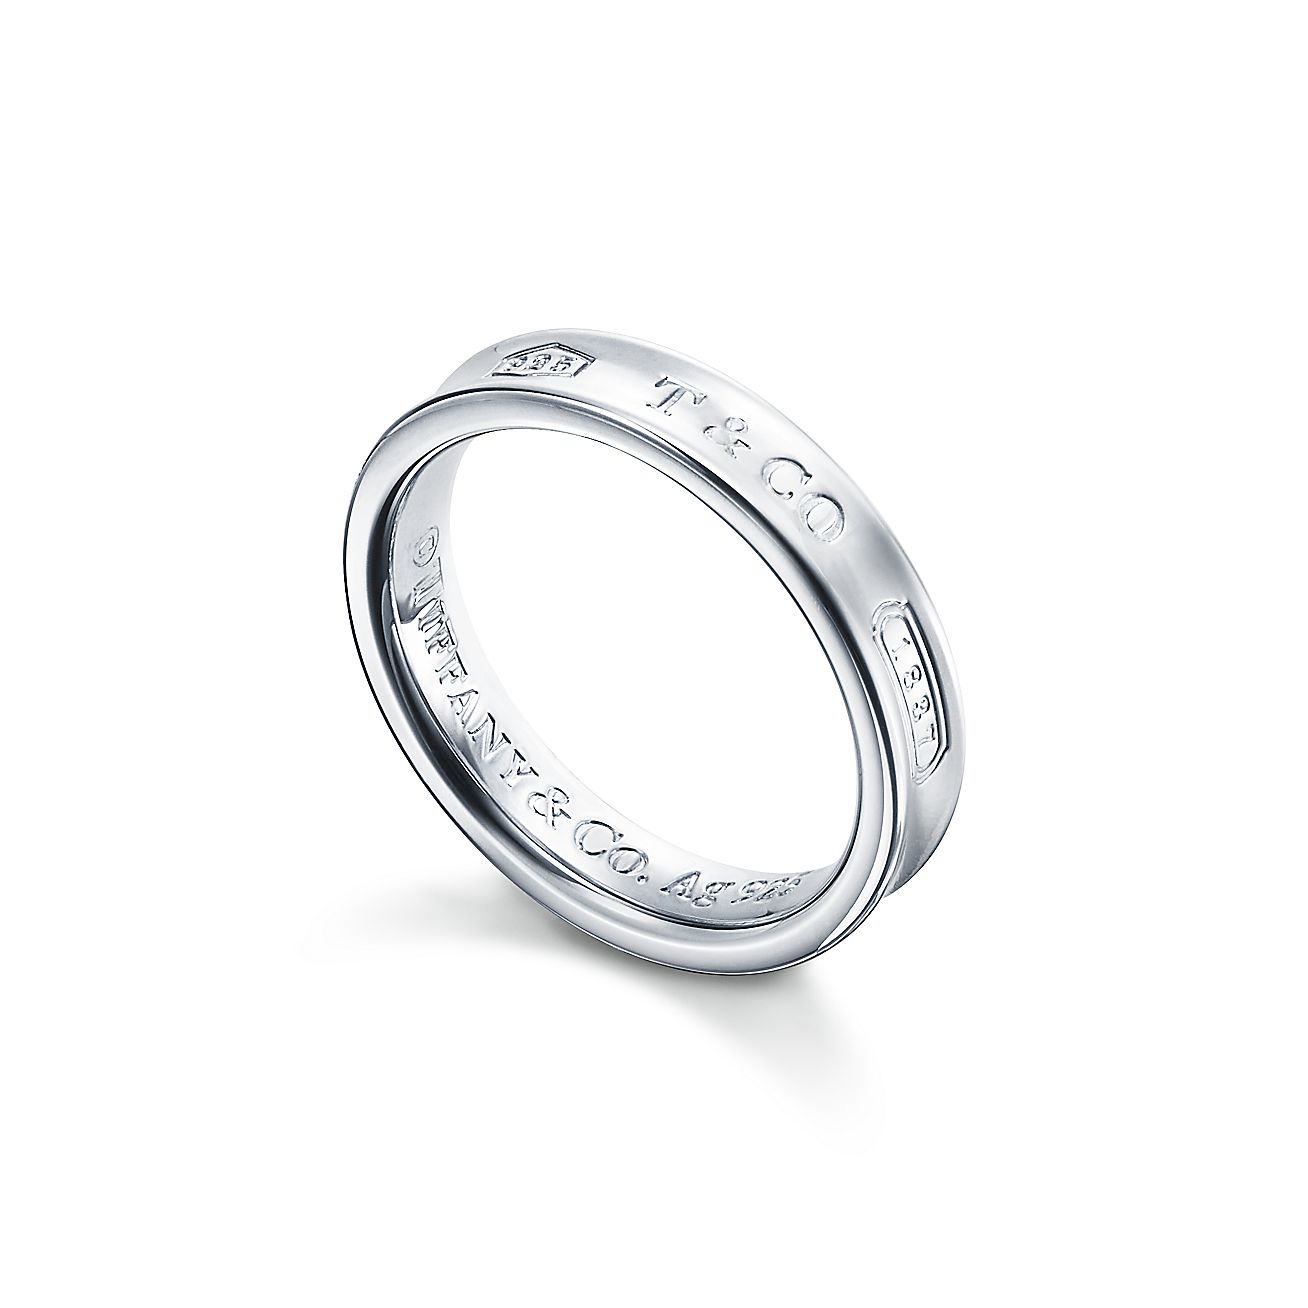 Tiffany 1837® Ring in Silver, Medium